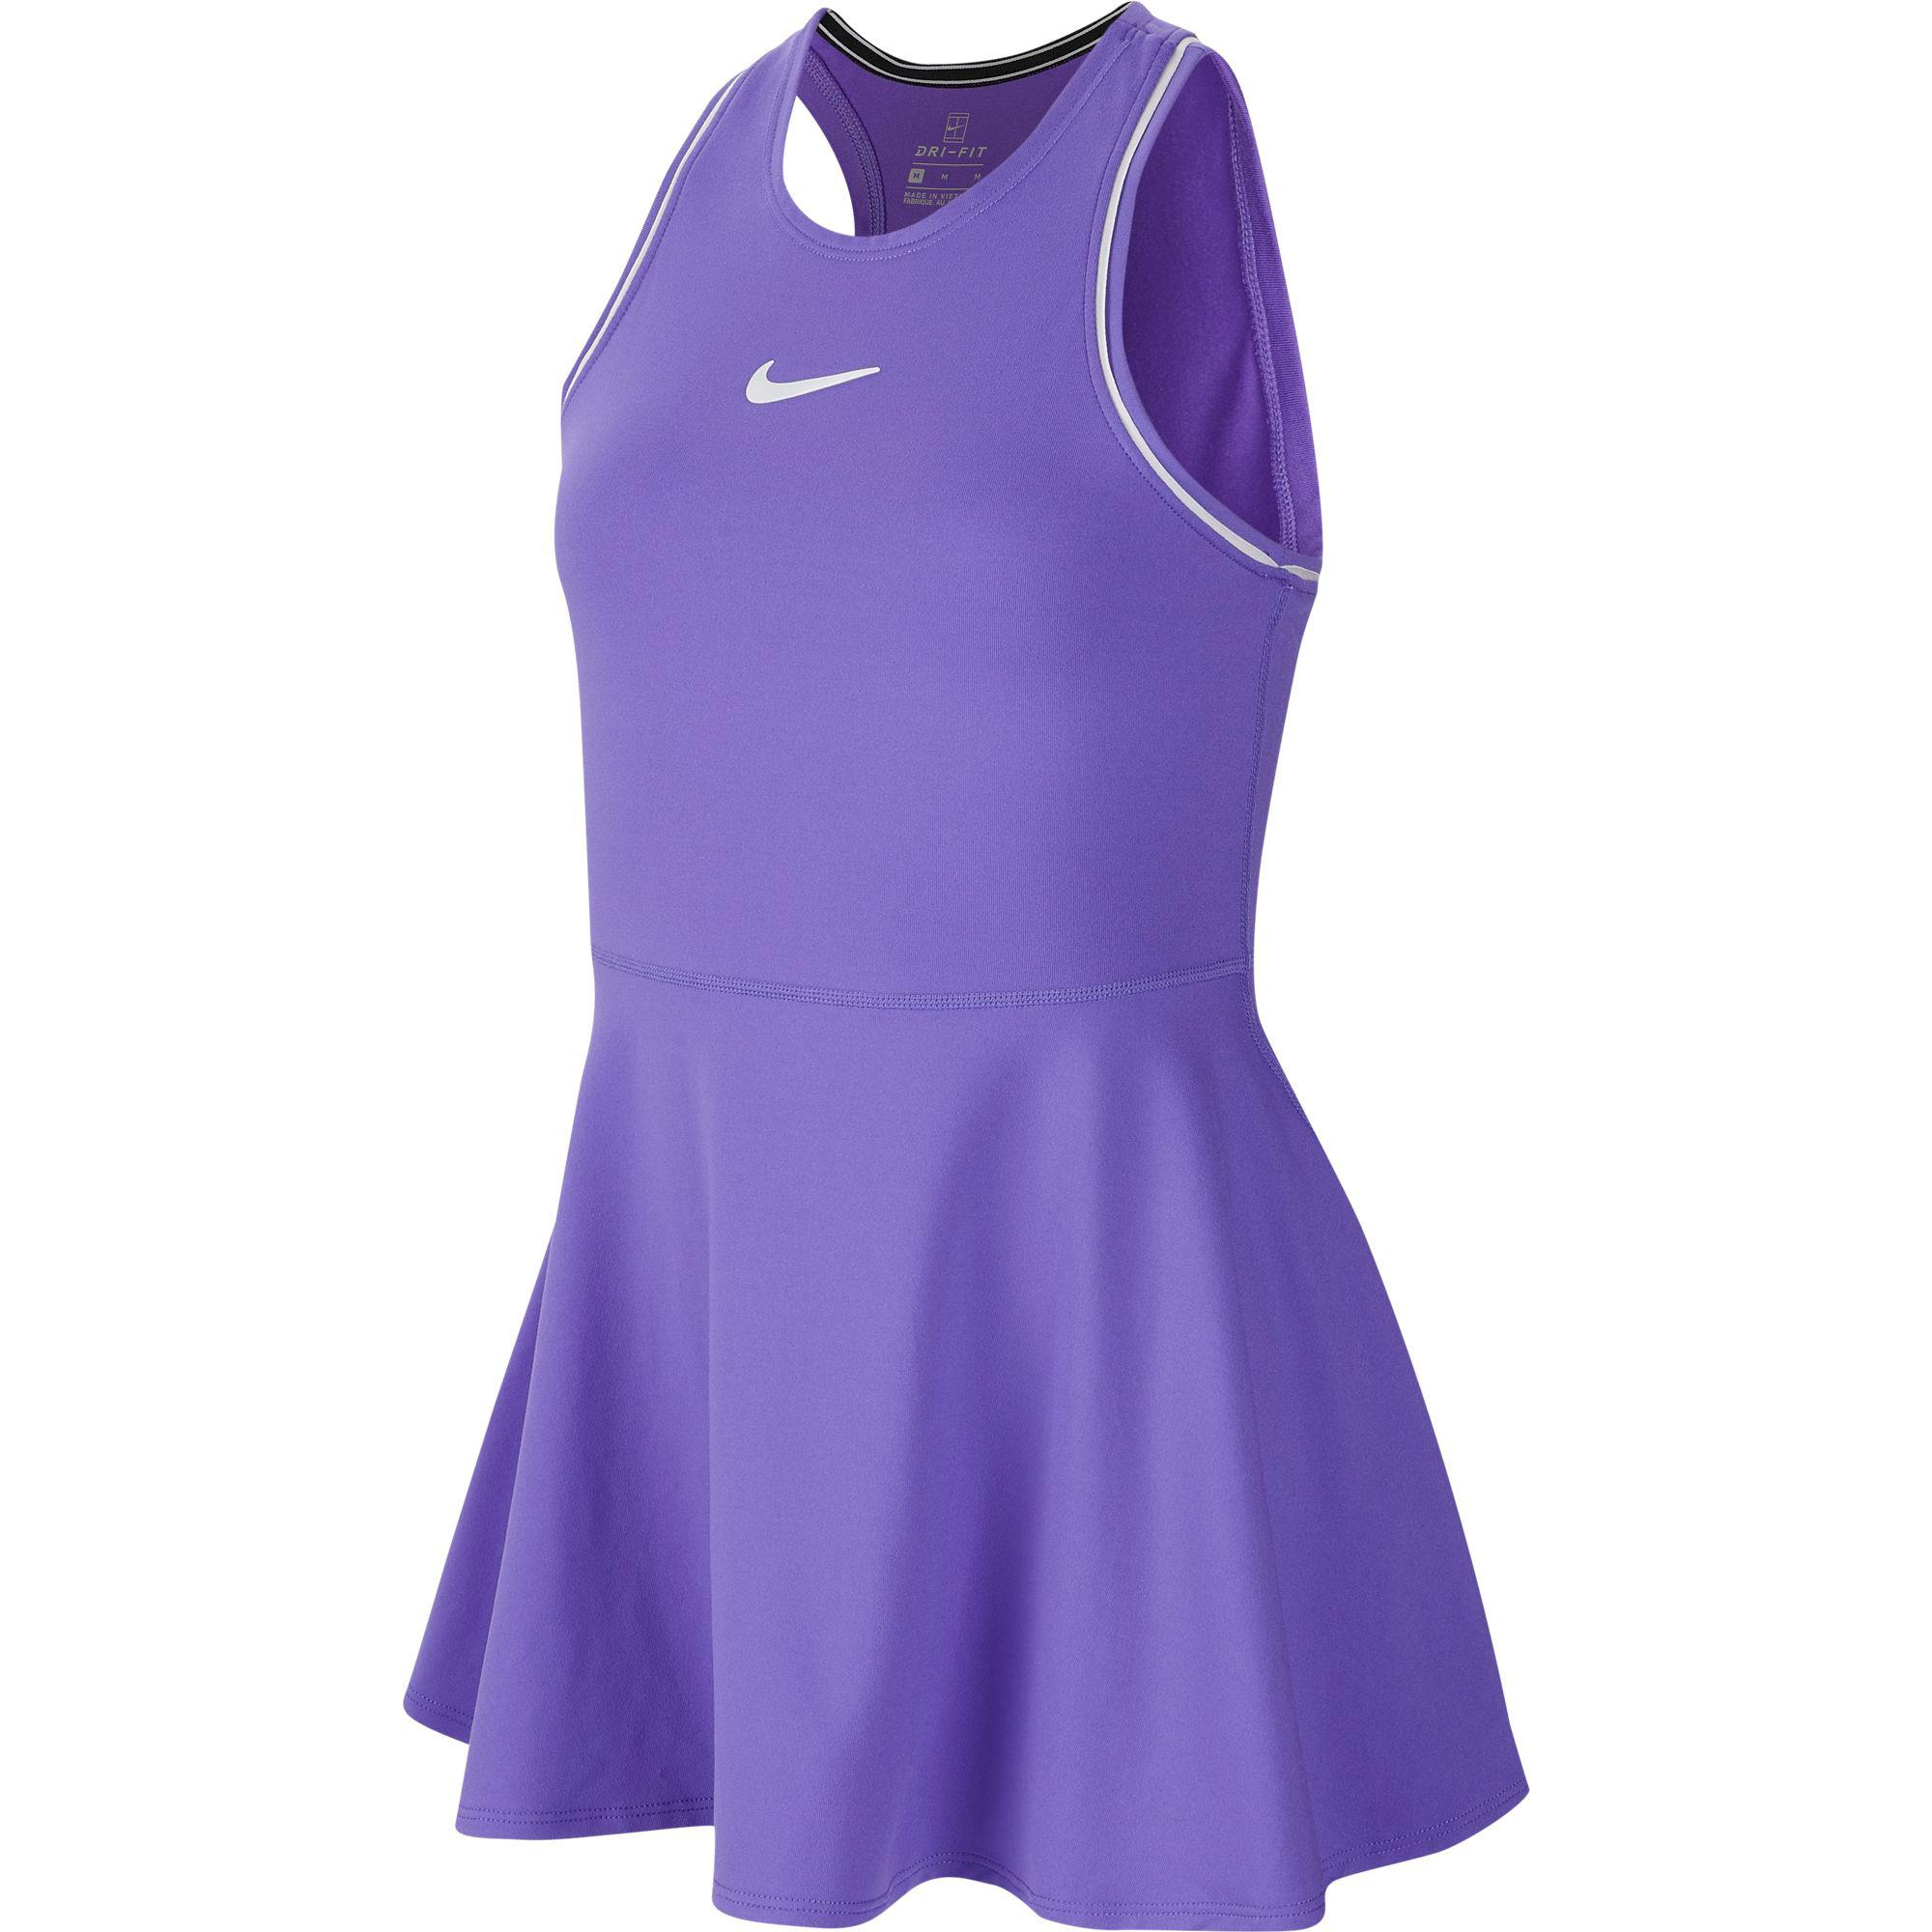 Buy > nike kids tennis dress > in stock